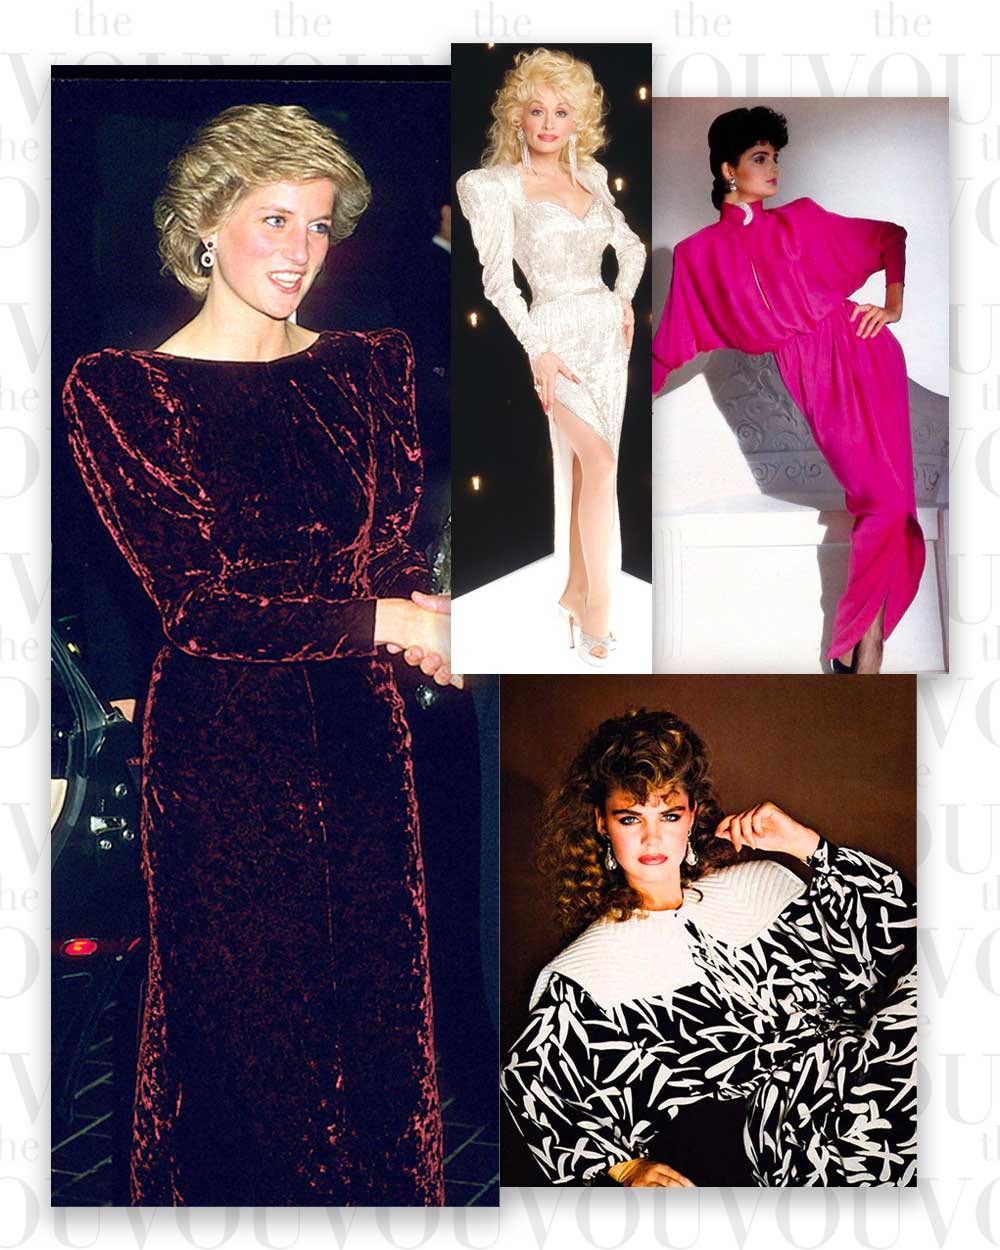 Padded Shoulder Dresses in 80s fashion